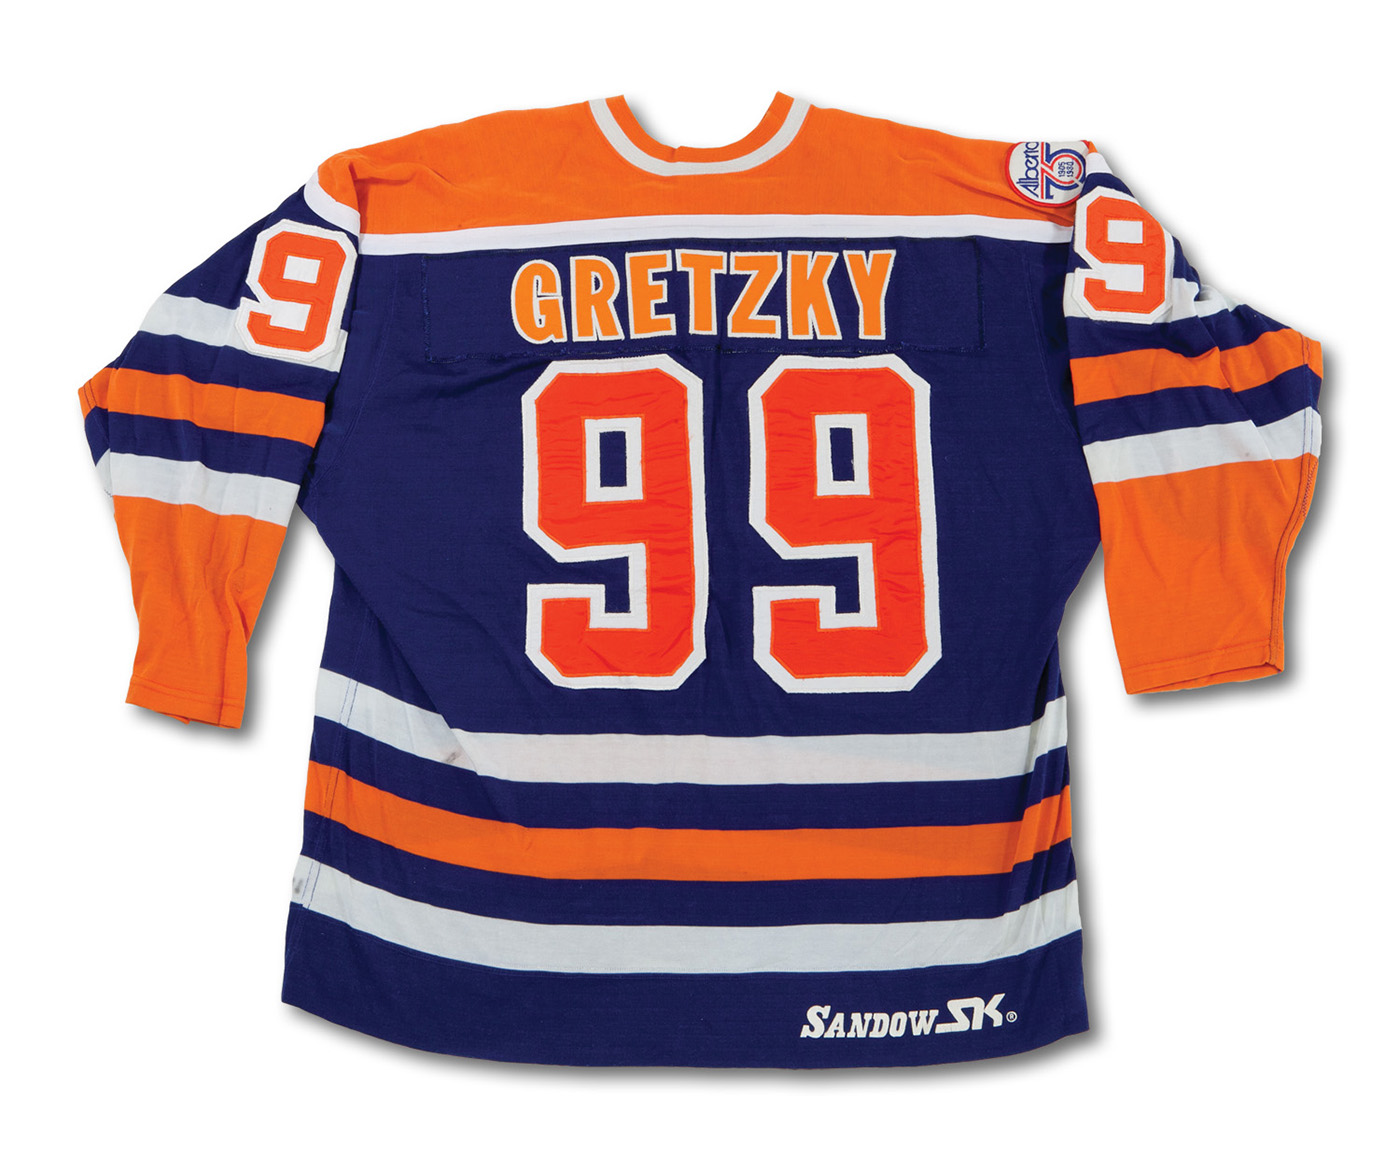 Wayne Gretzky's 1980-81 Oilers Road Gamer Could Hit Six Figures